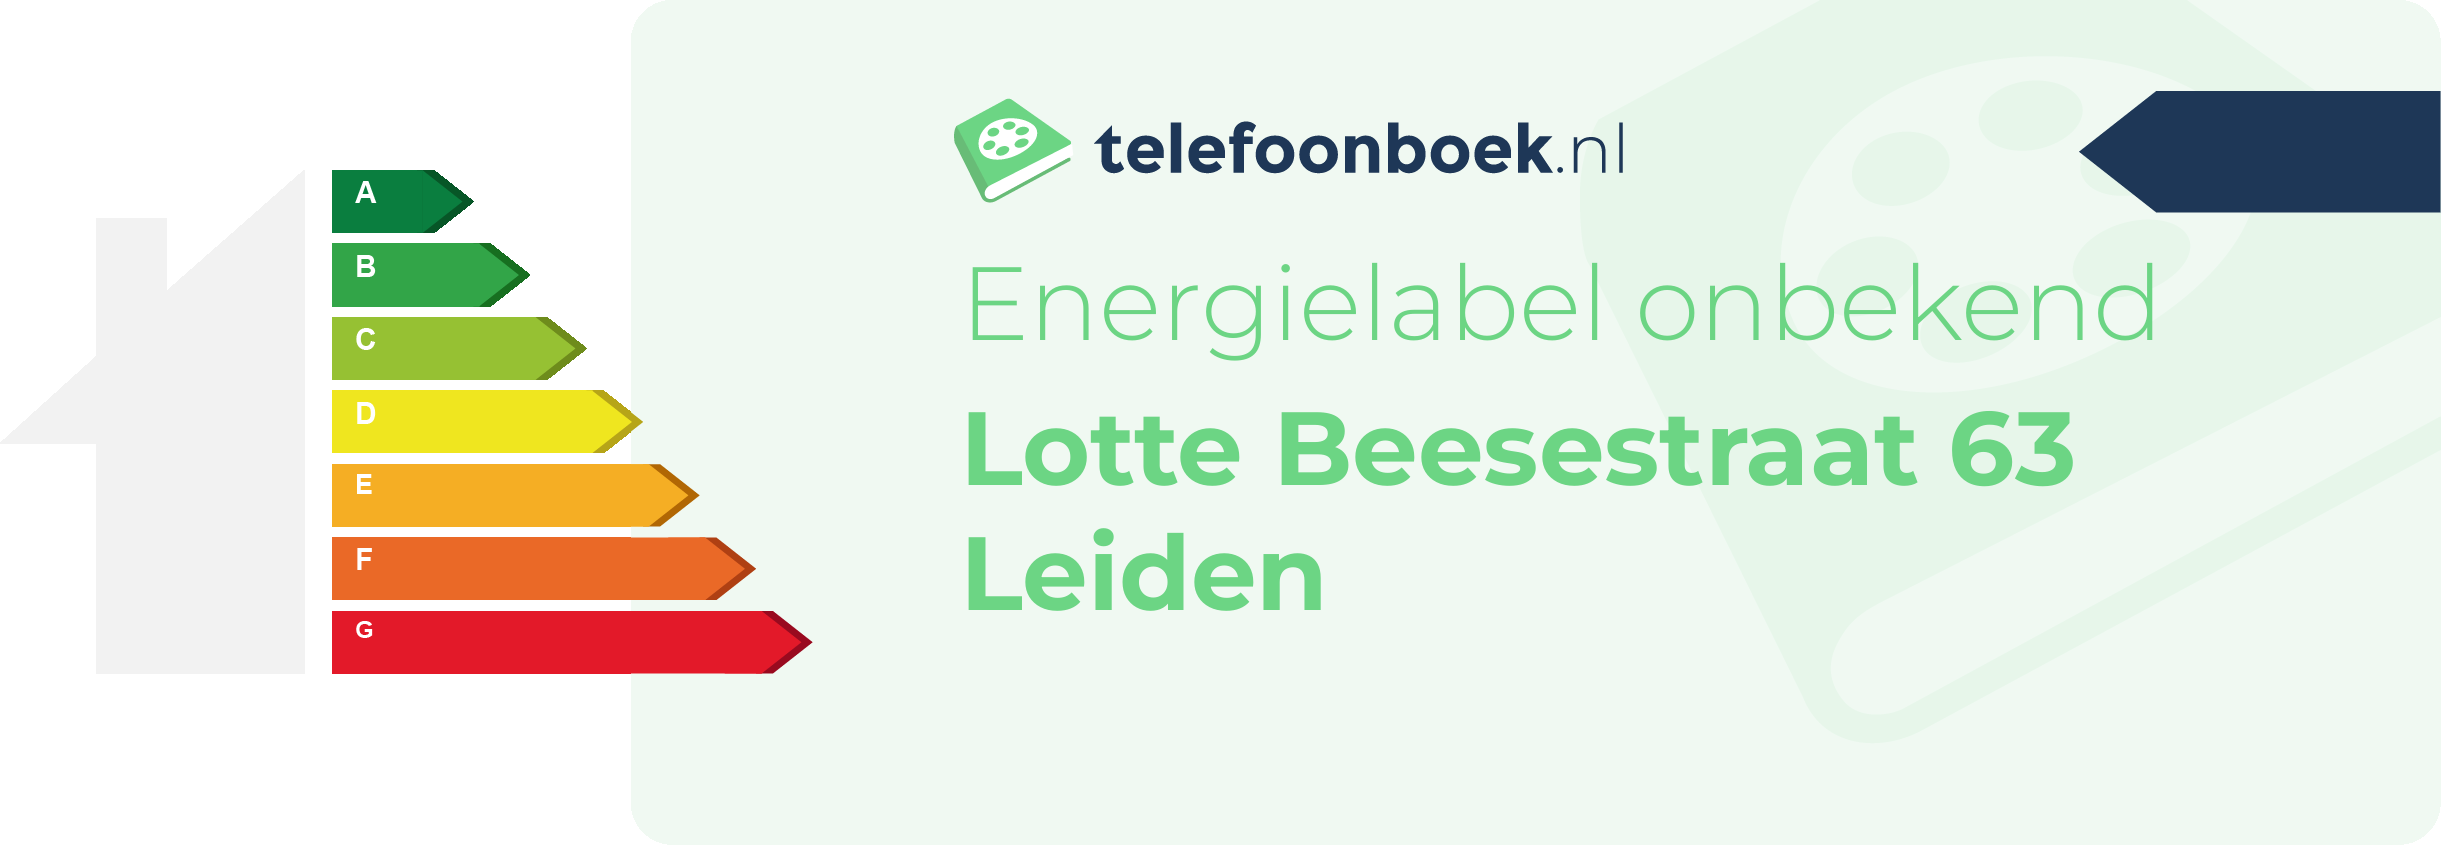 Energielabel Lotte Beesestraat 63 Leiden